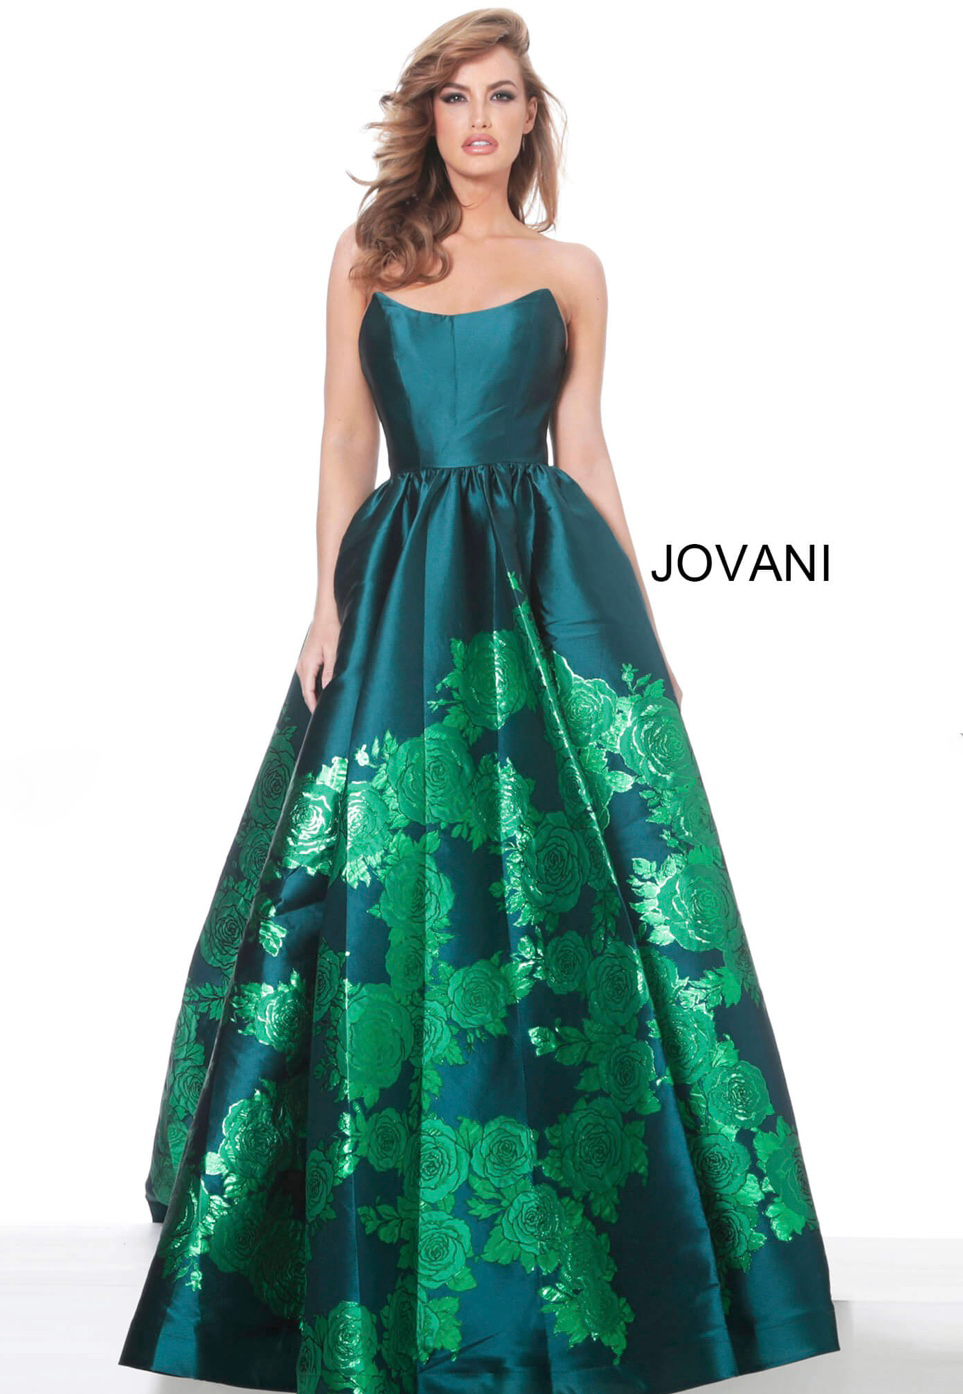 JOVANI 02038 ROSE PRINT STRAPLESS DRESS